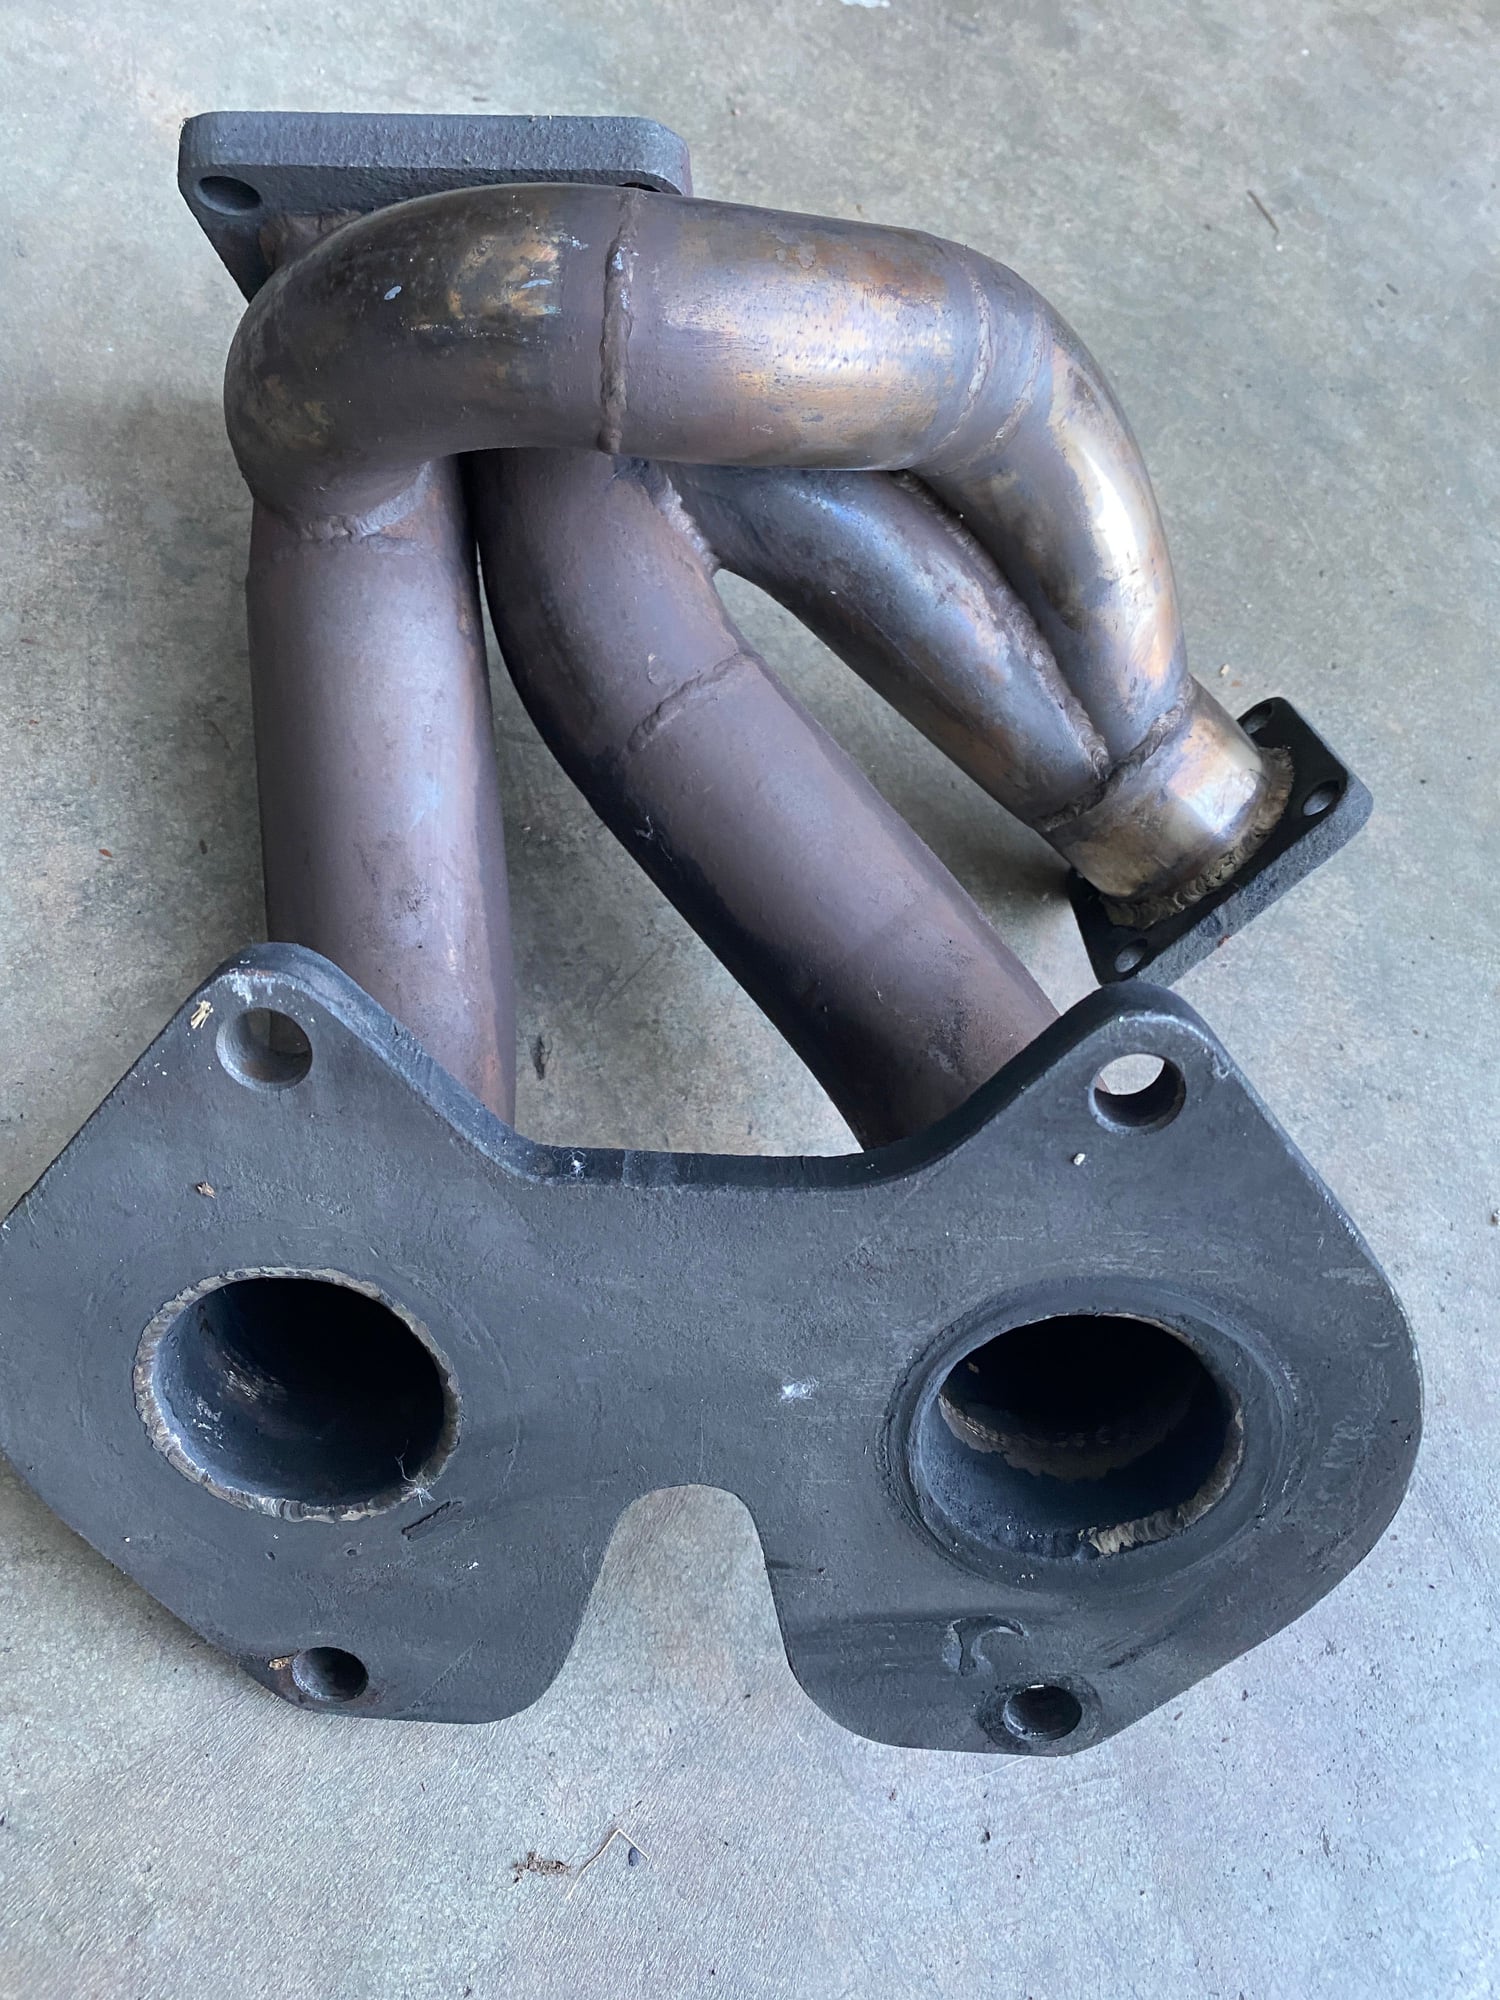 Engine - Exhaust - T4 tubular manifold and greddy wastegate - Used - 1992 to 2002 Mazda RX-7 - Bothell, WA 98012, United States